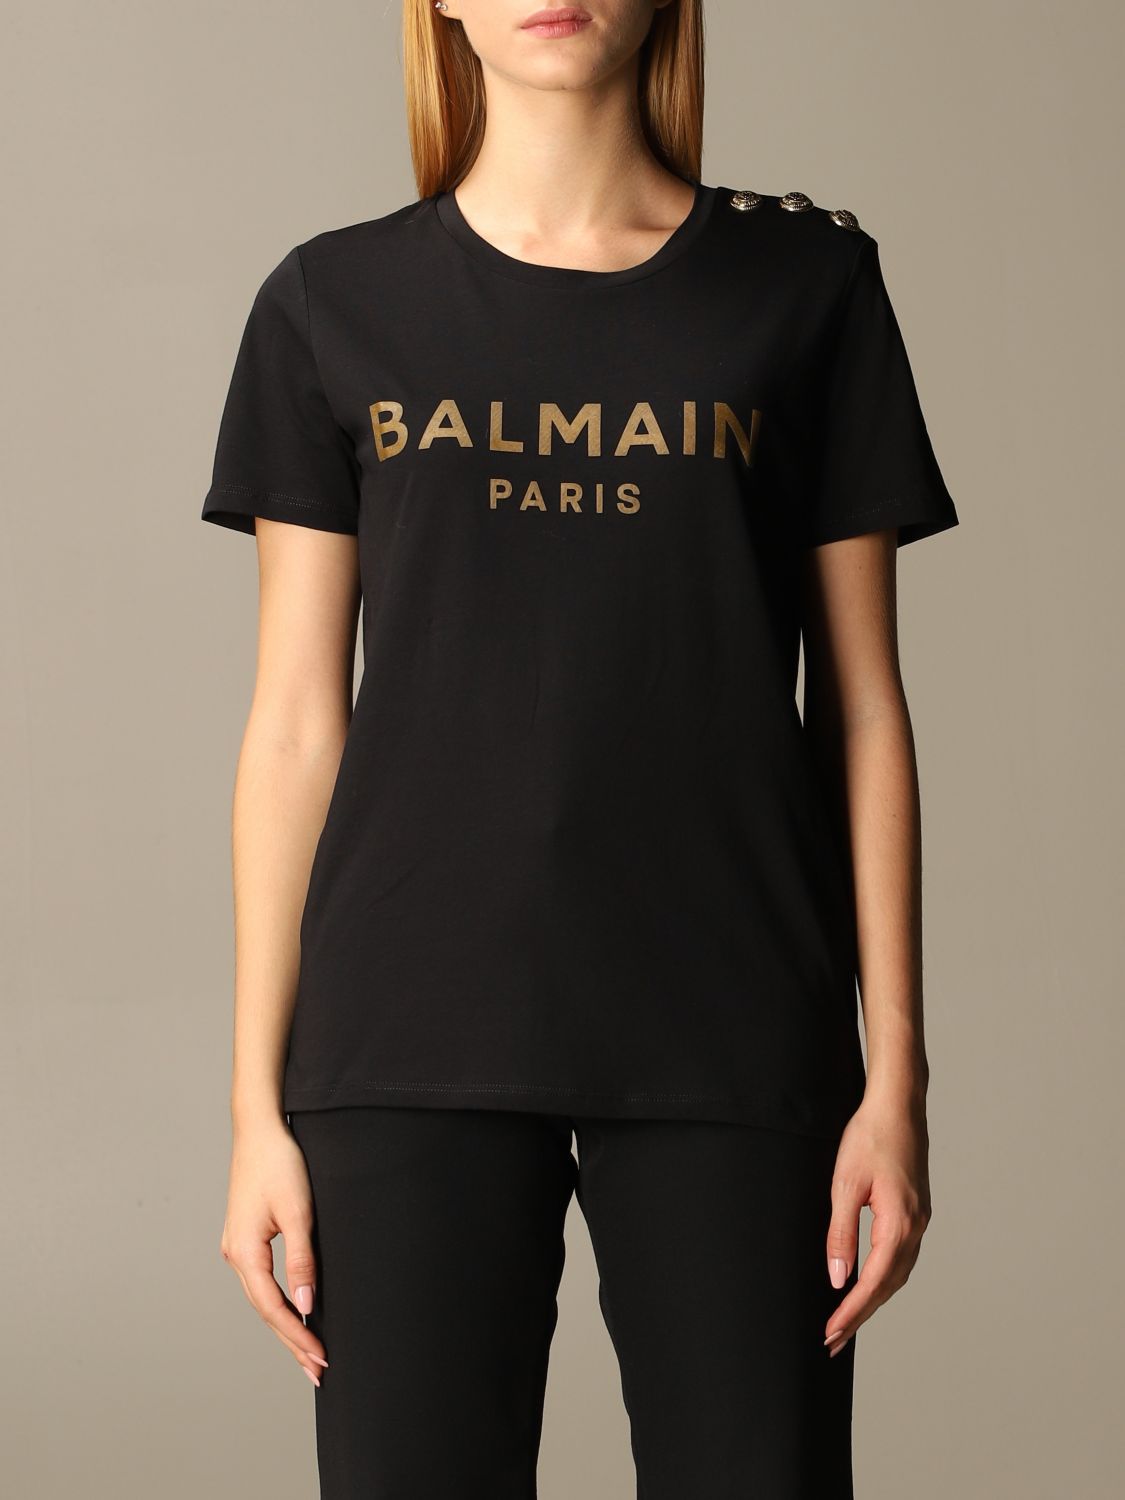 balmain paris t shirt women's